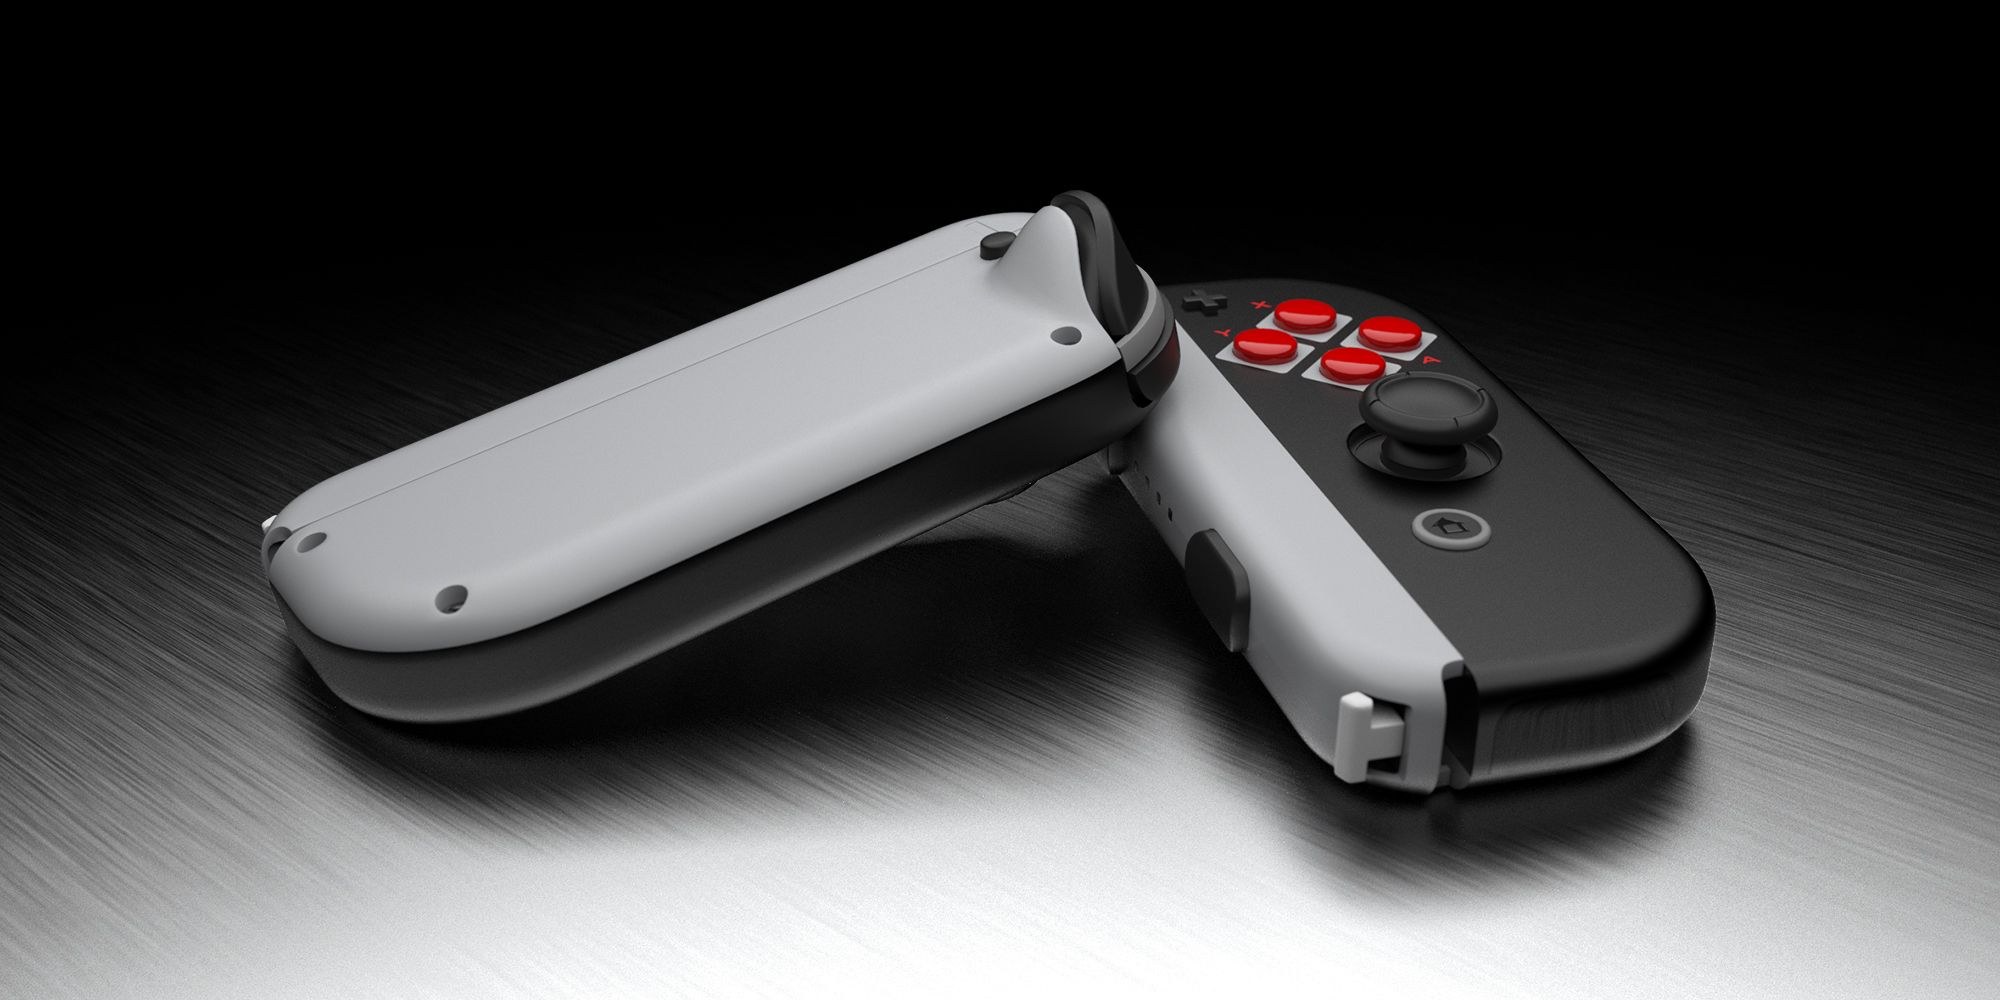 Image Depicting Two Nintendo Switch Joy Cons